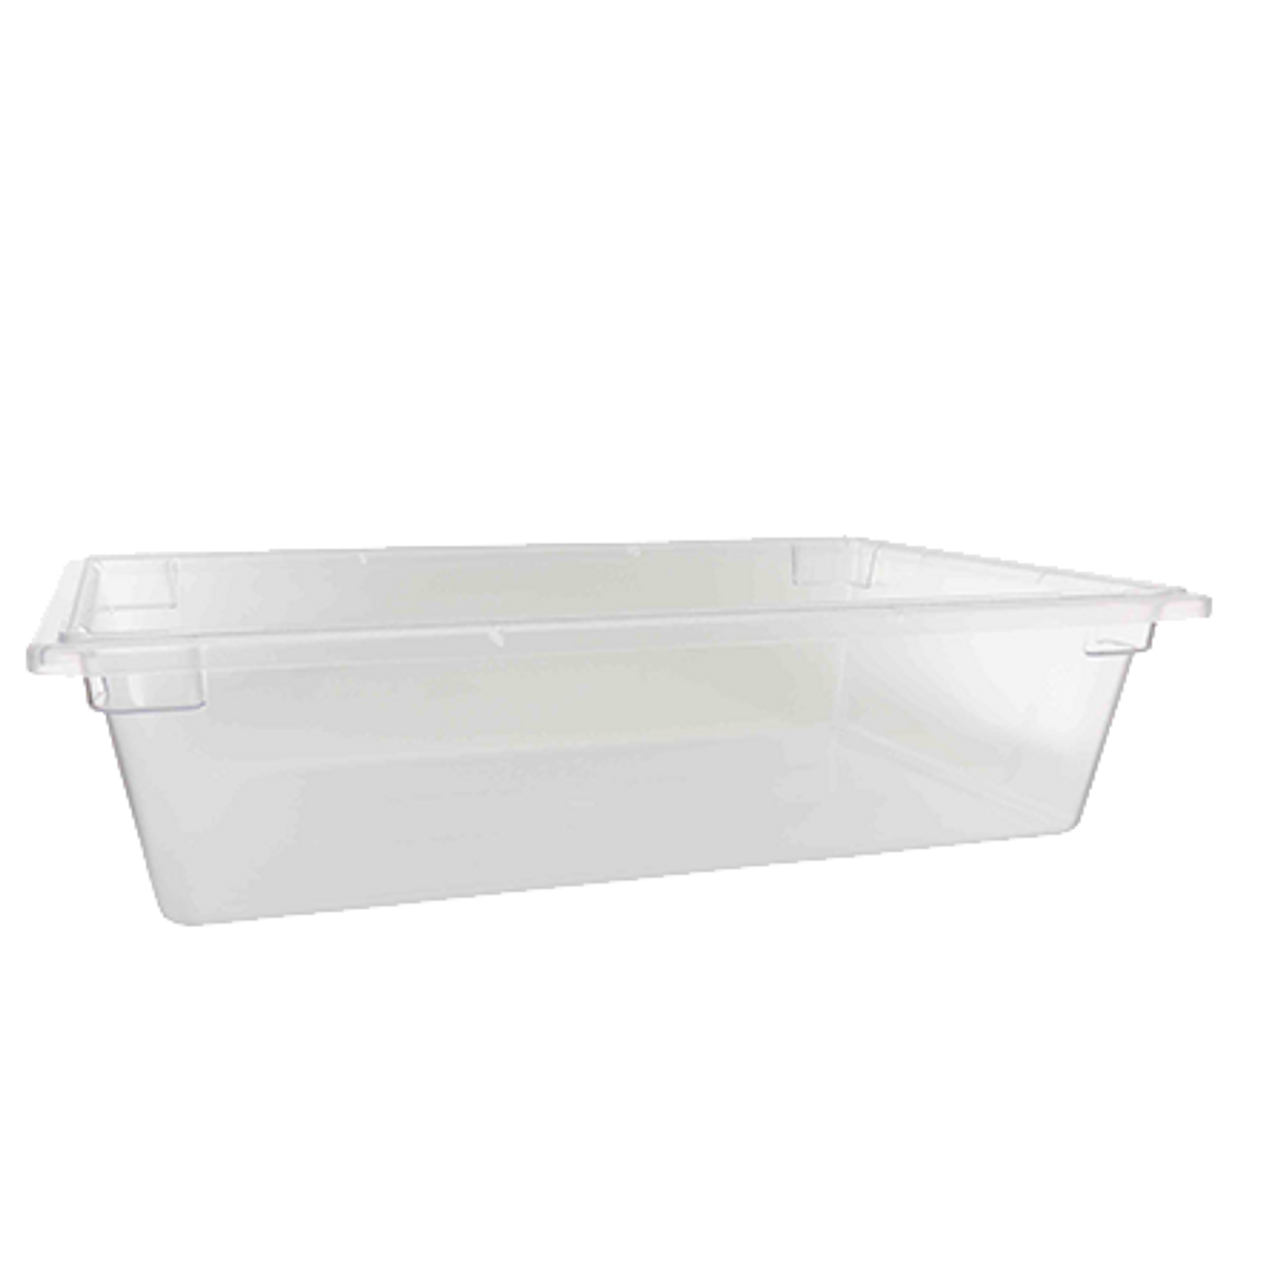 Cambro Camwear 18 x 12 x 9 Clear Polycarbonate Food Storage Box with Lid  - 6/Set